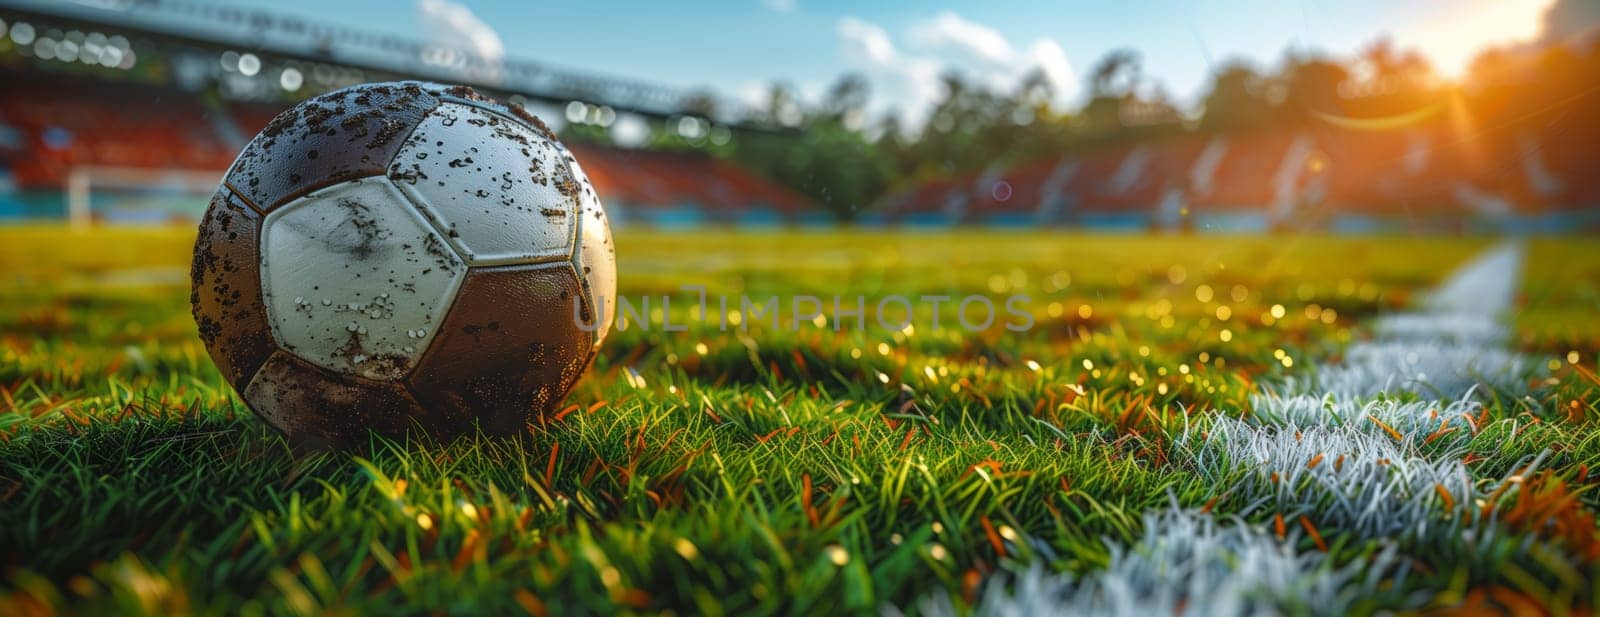 Sports equipment Ball resting on grass field, under blue sky by richwolf